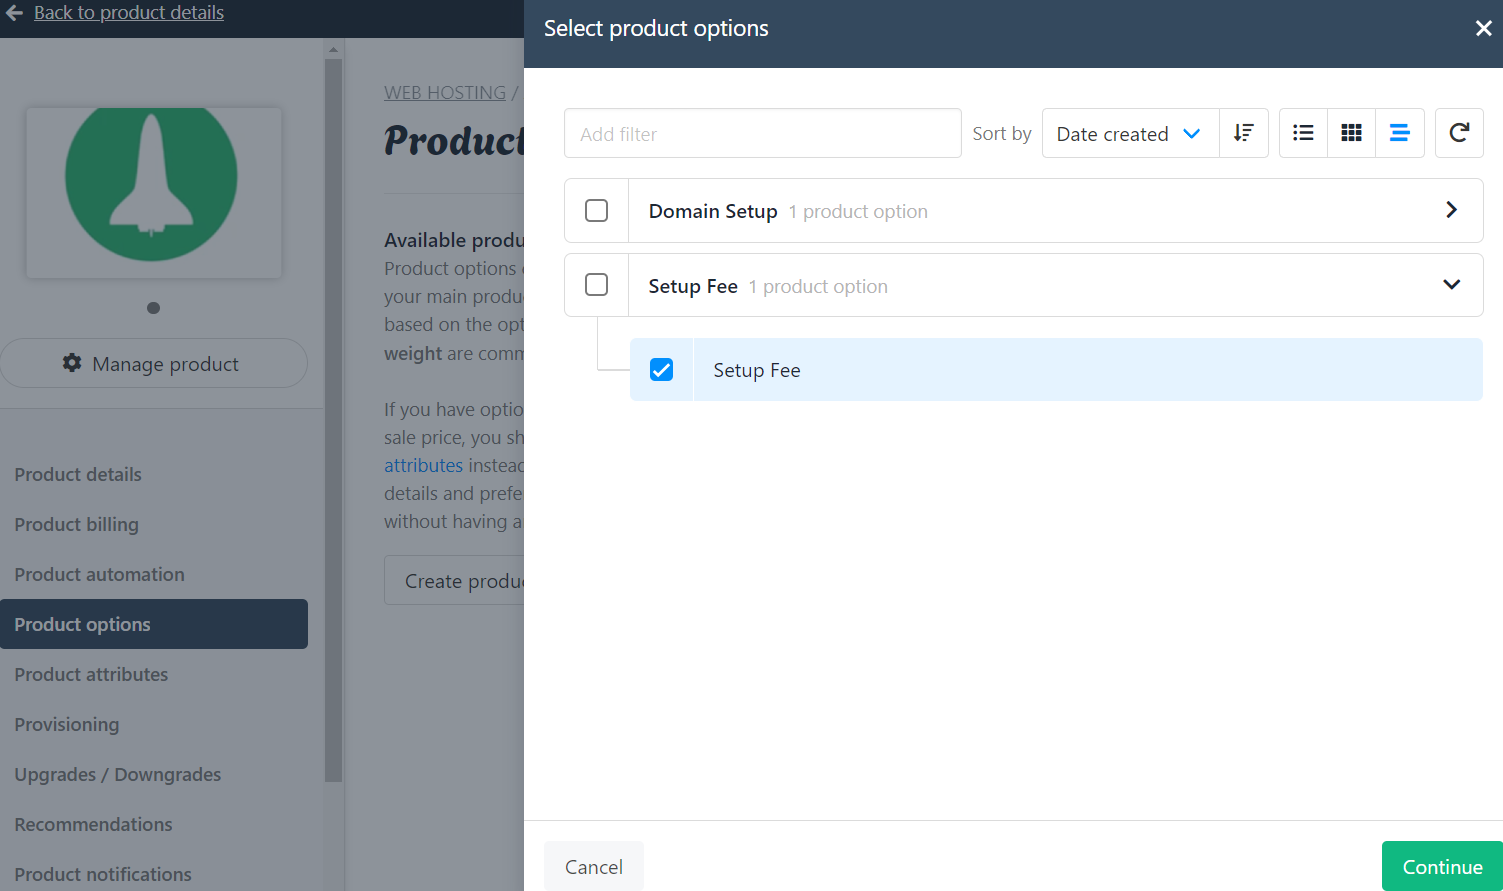 Select the product option > setup fee